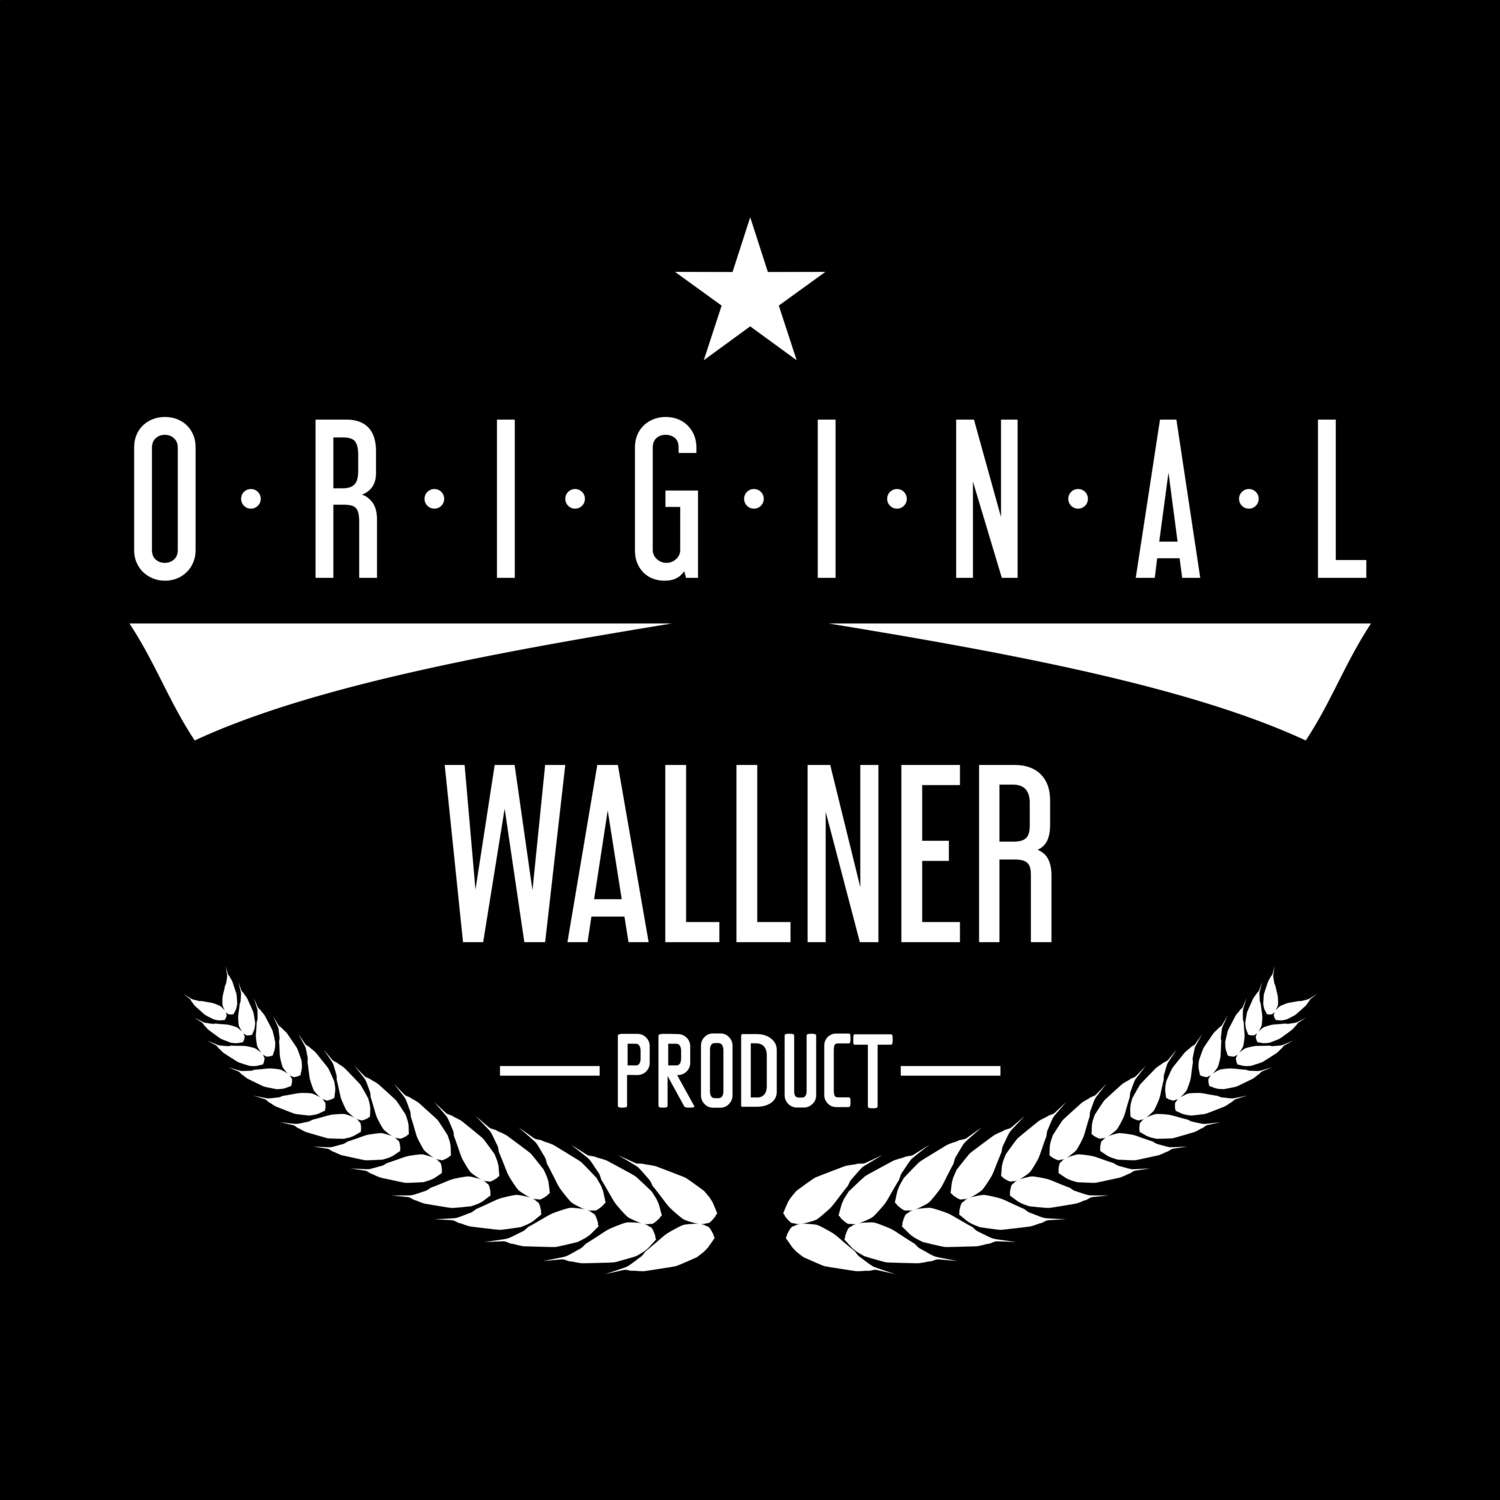 Wallner T-Shirt »Original Product«